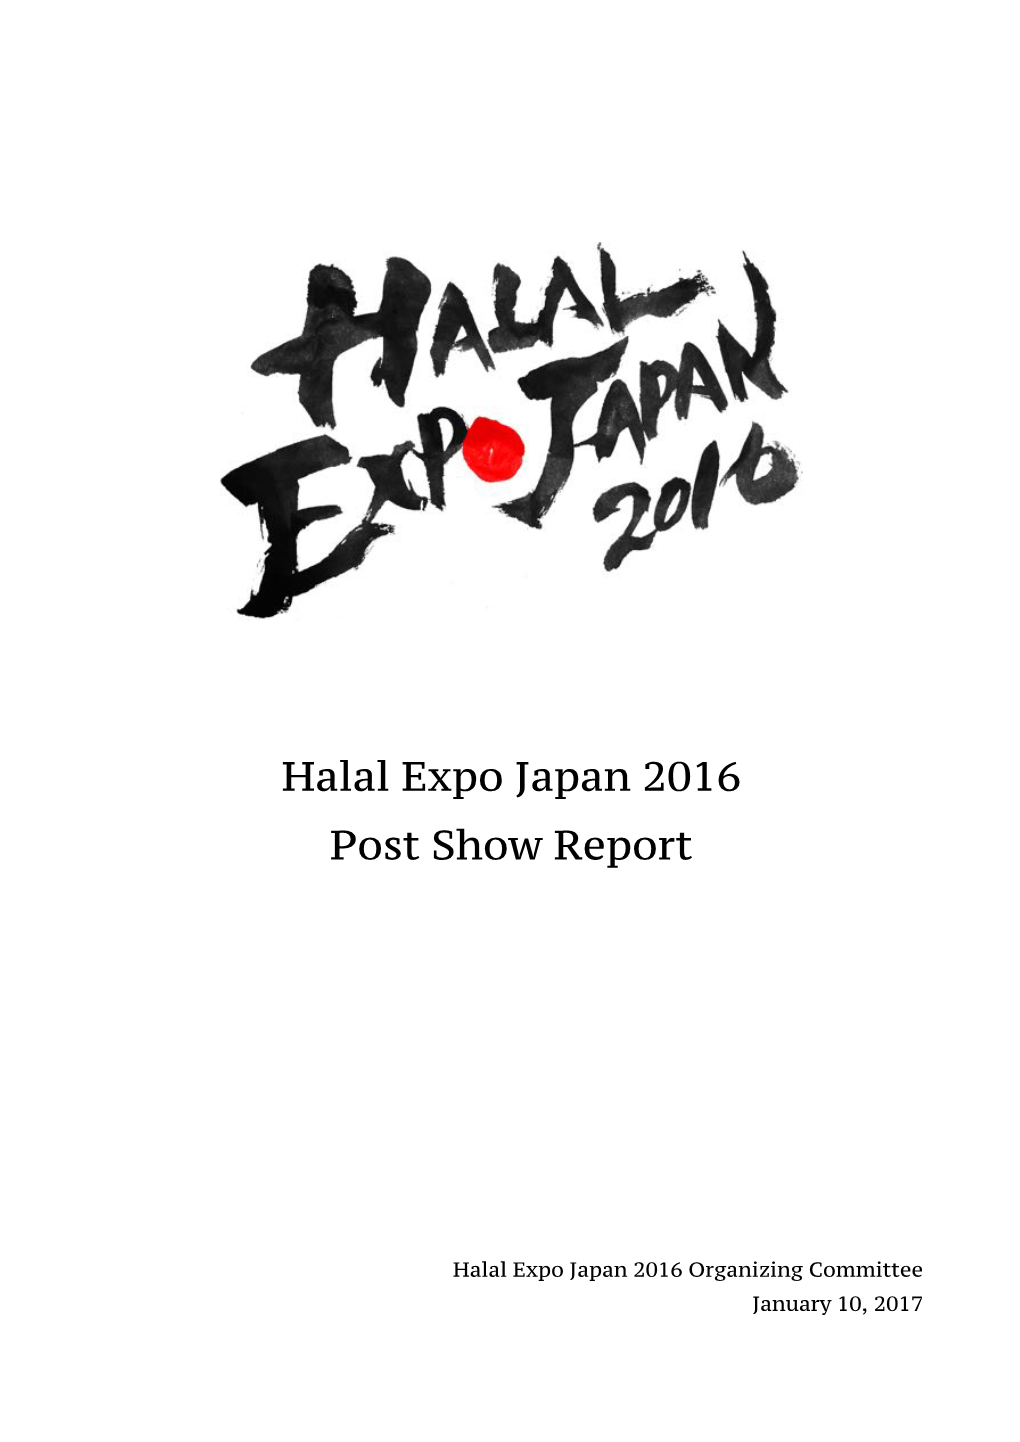 Halal Expo Japan 2016 Post Show Report (PDF)